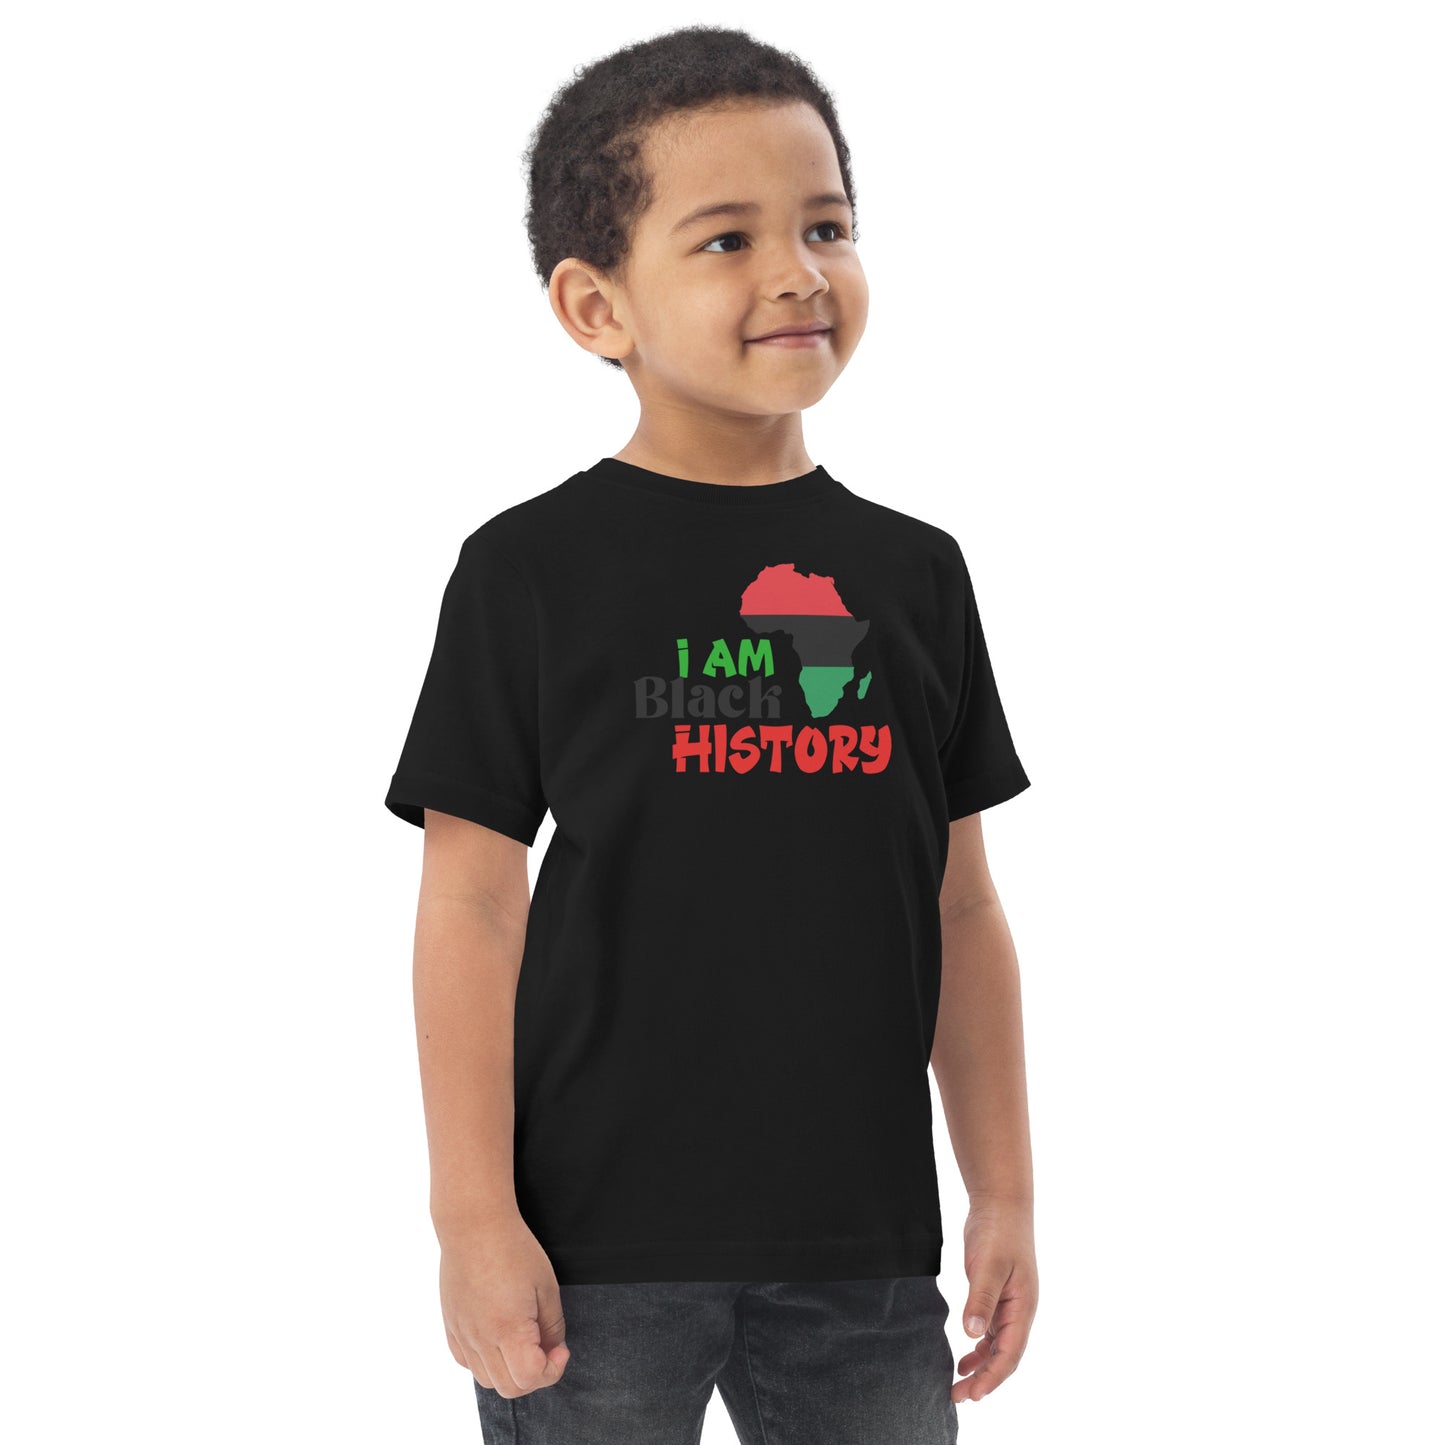 Toddler jersey t-shirt - I Am Black History